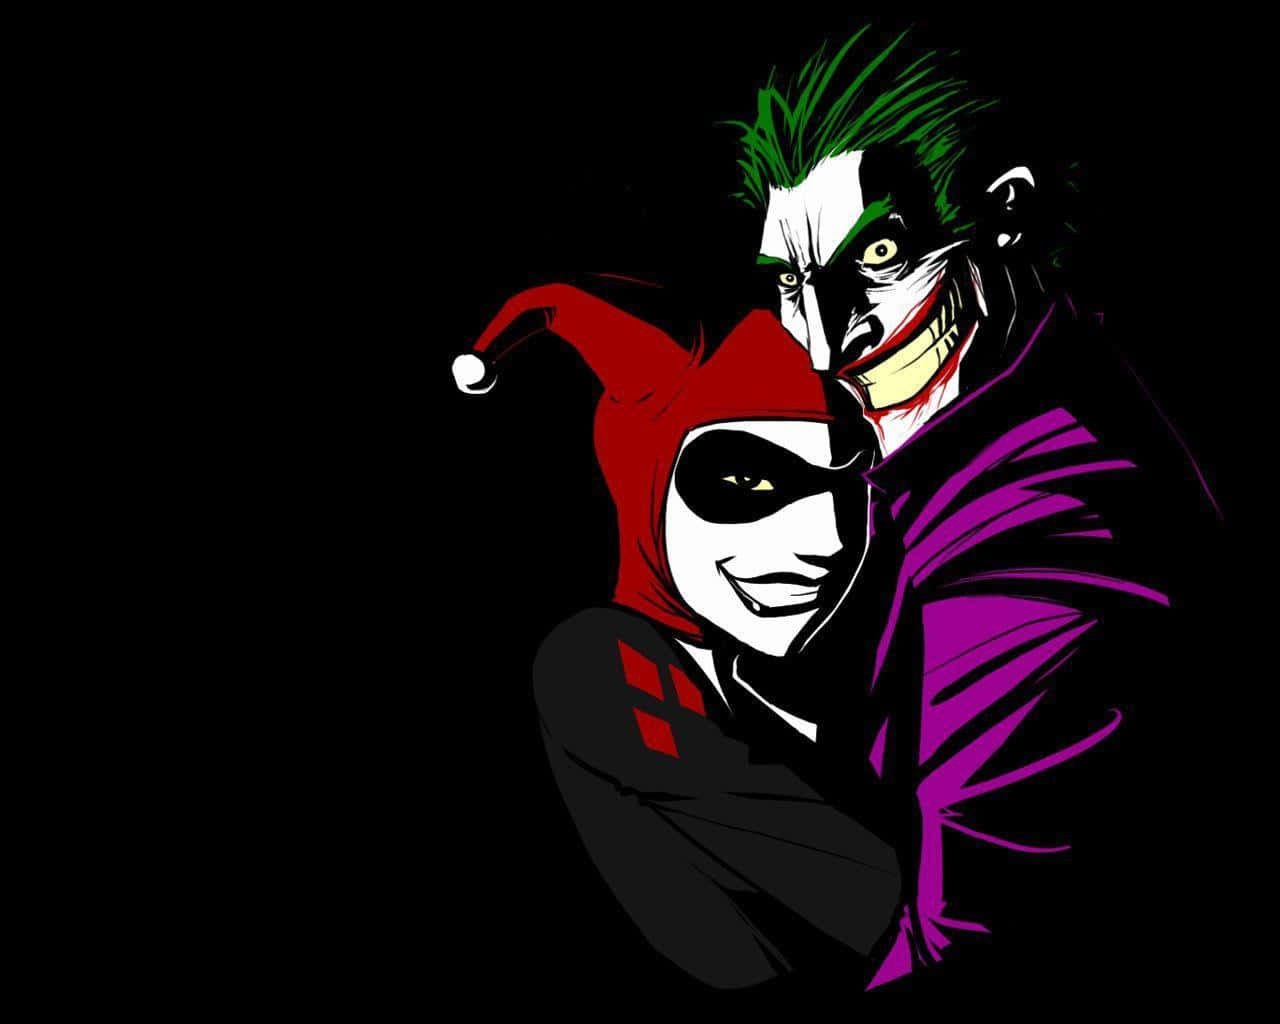 The Dark and Enigmatic Joker - Legendary Comic Book Villain Wallpaper